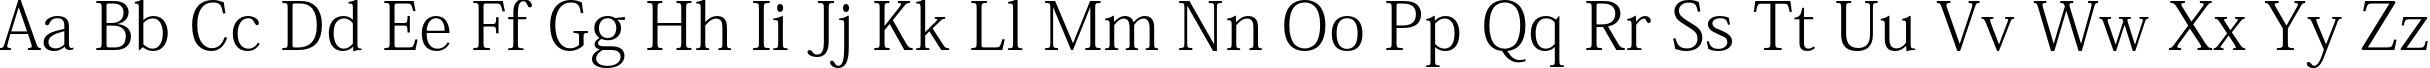 Пример написания английского алфавита шрифтом Adobe Fangsong Std R